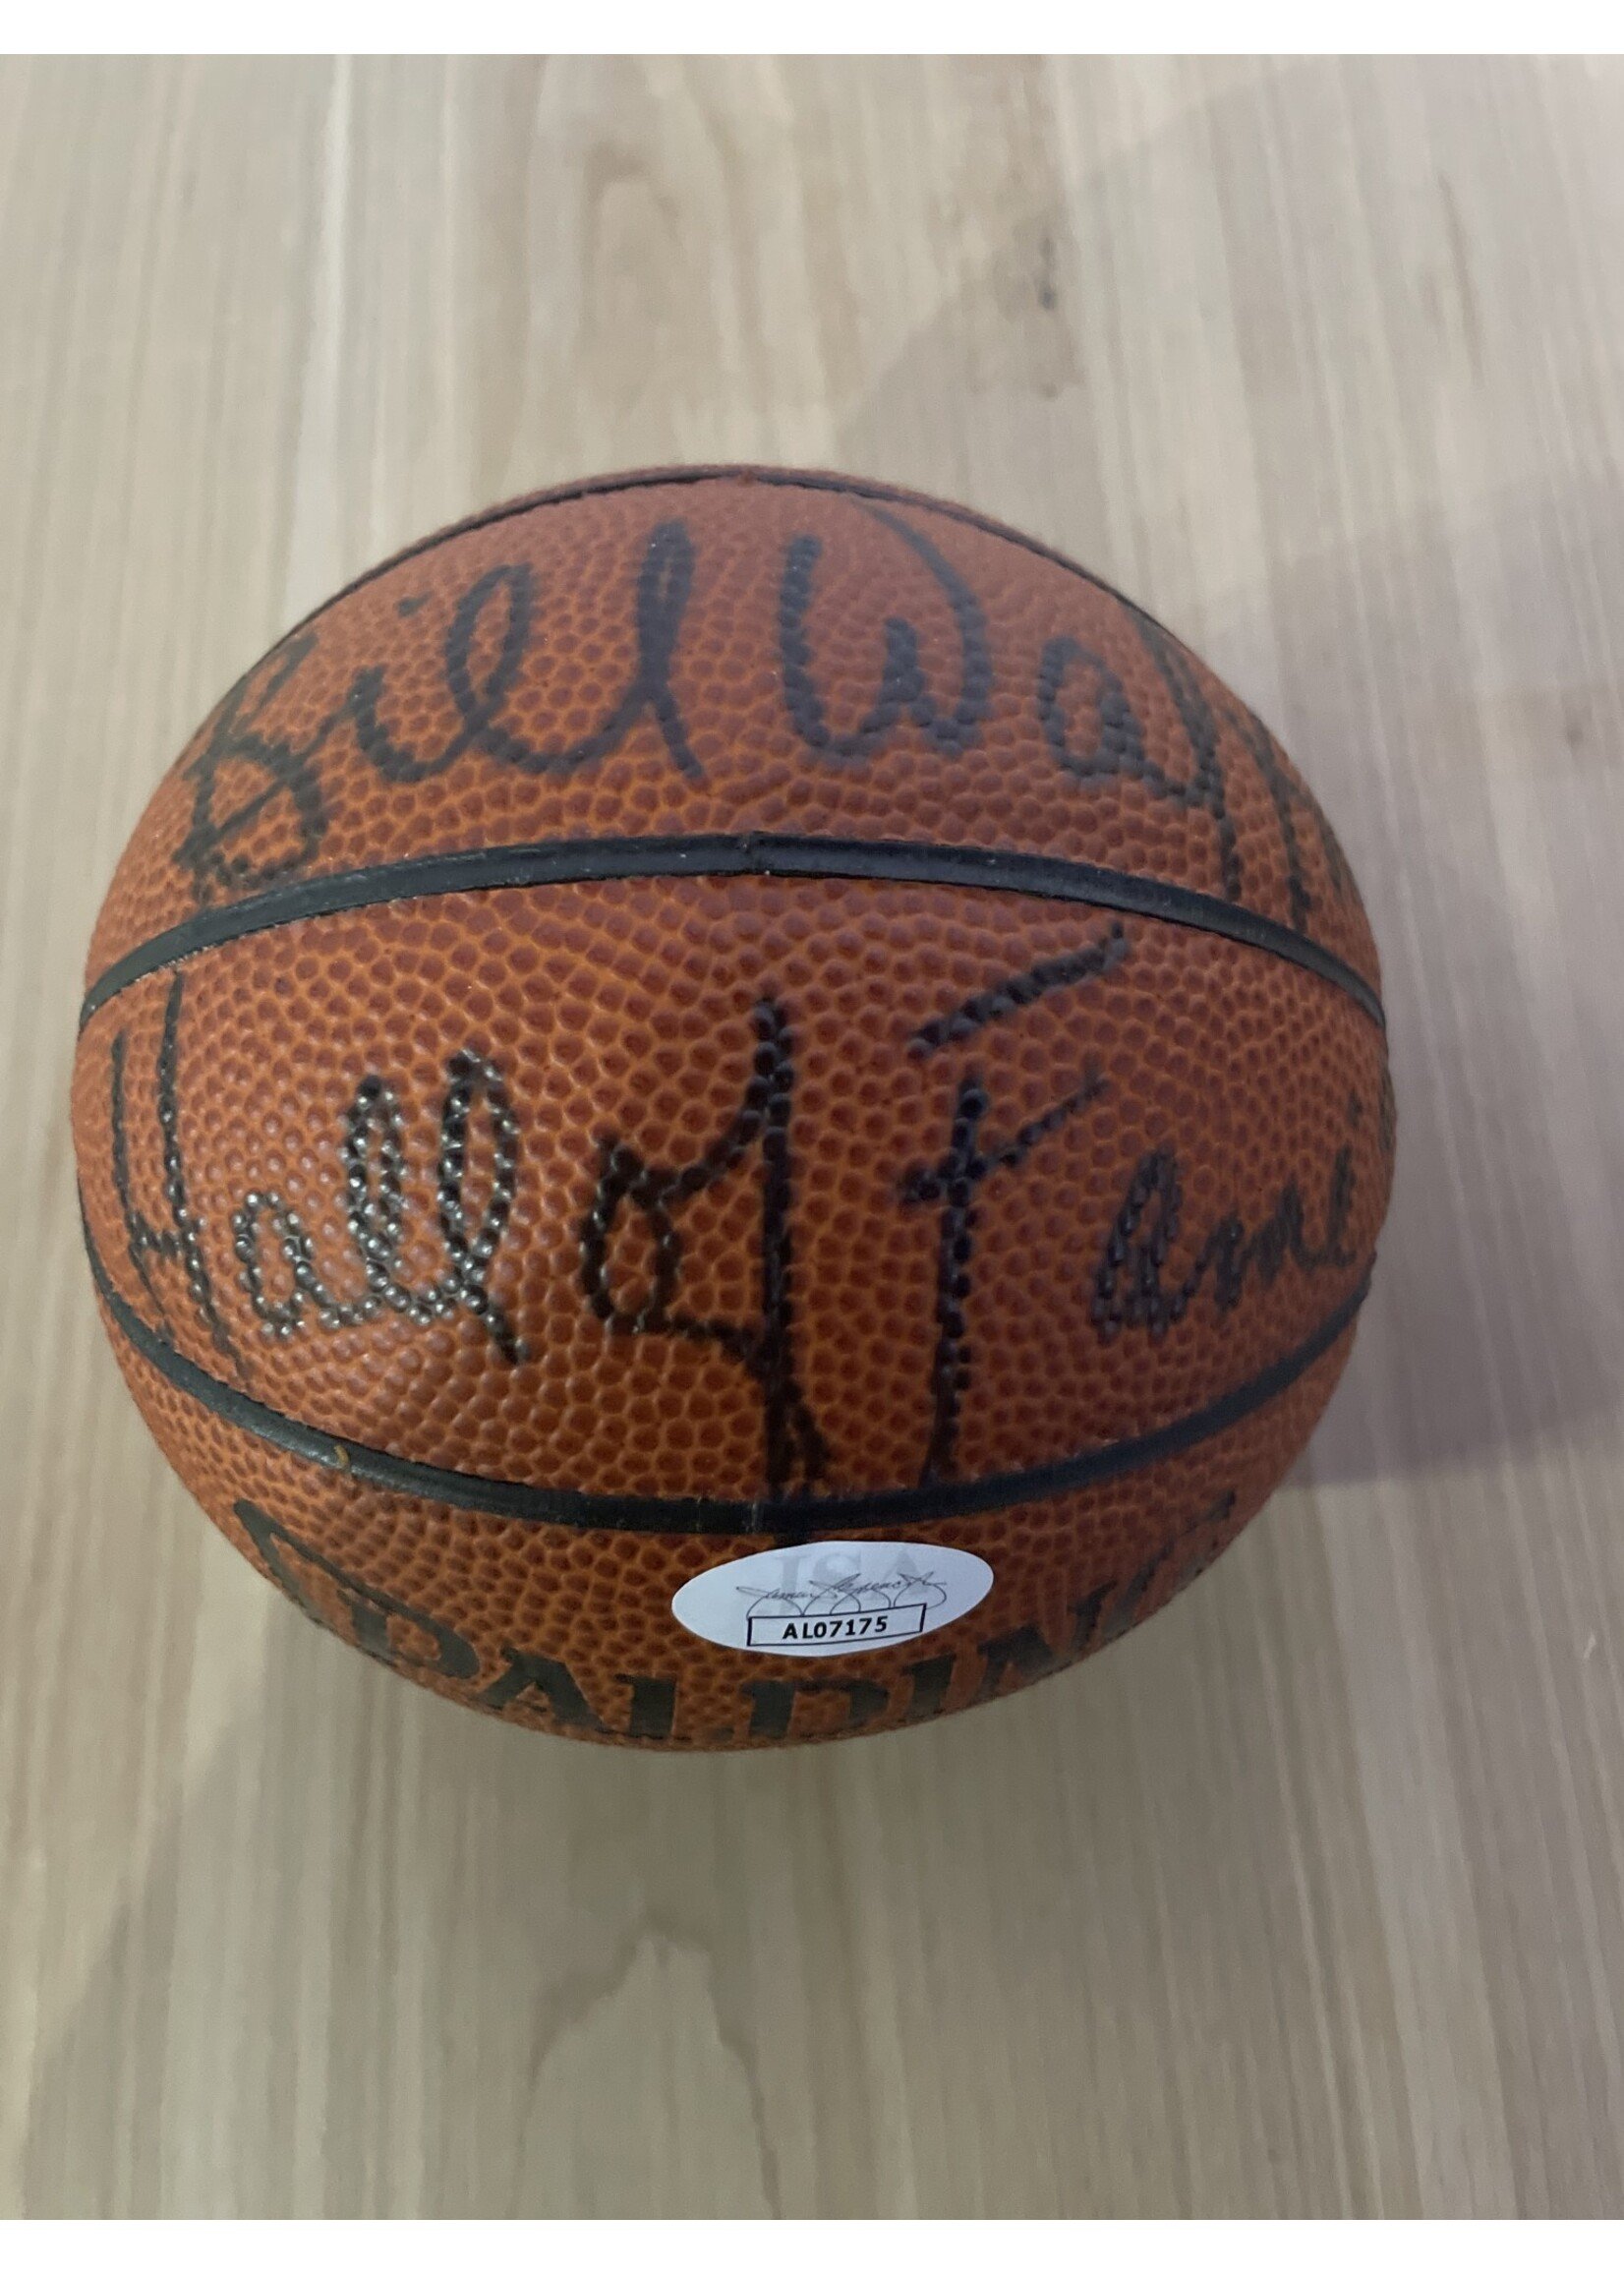 Bill Walton Mini Basketball